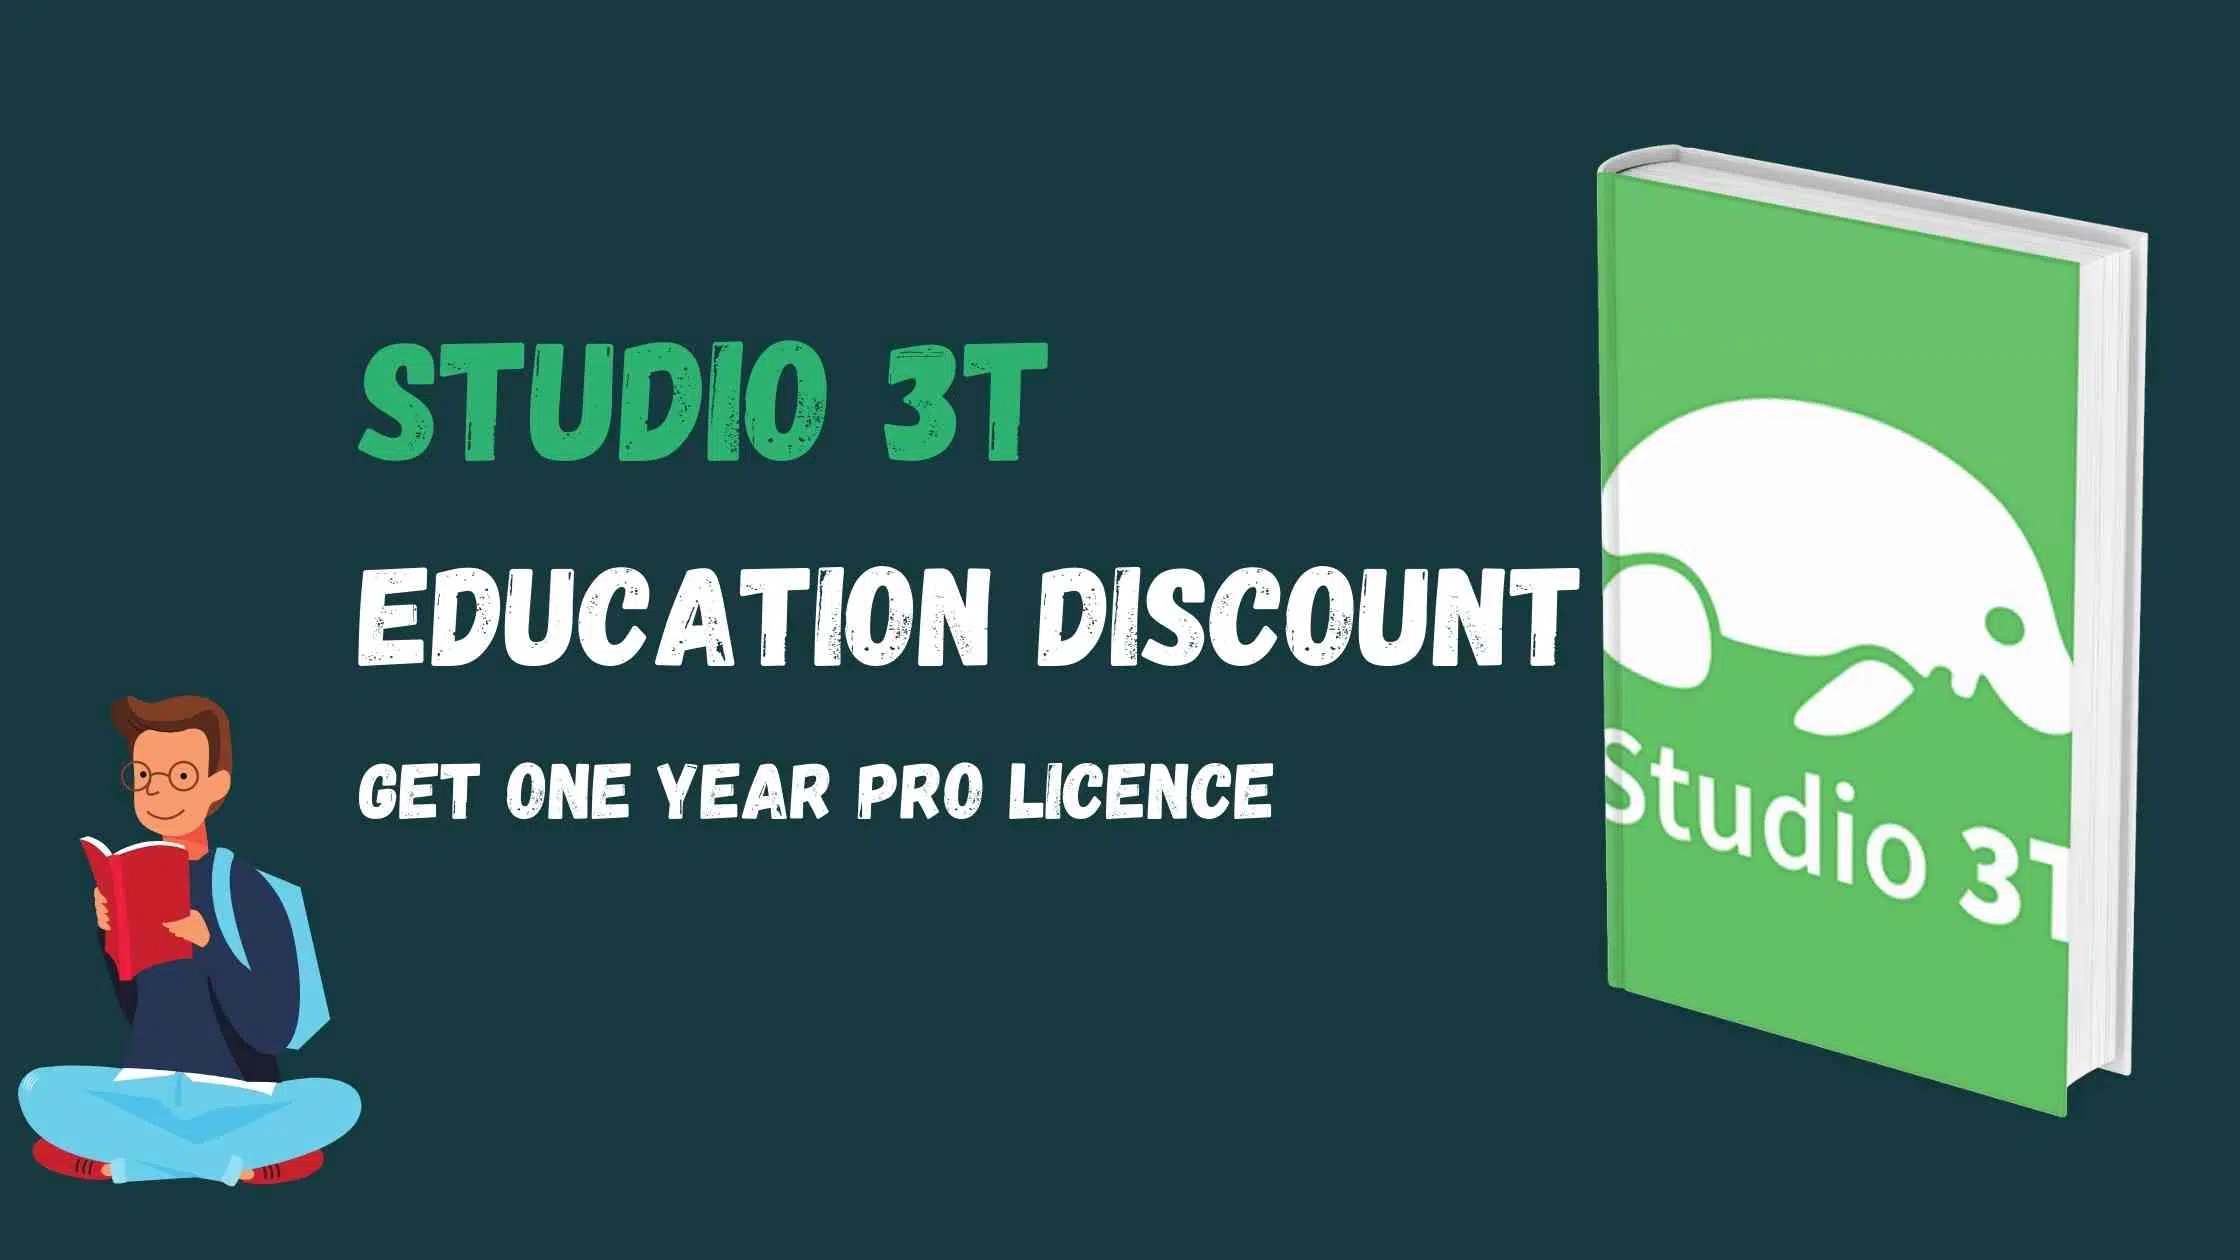 Studio 3T Student offer